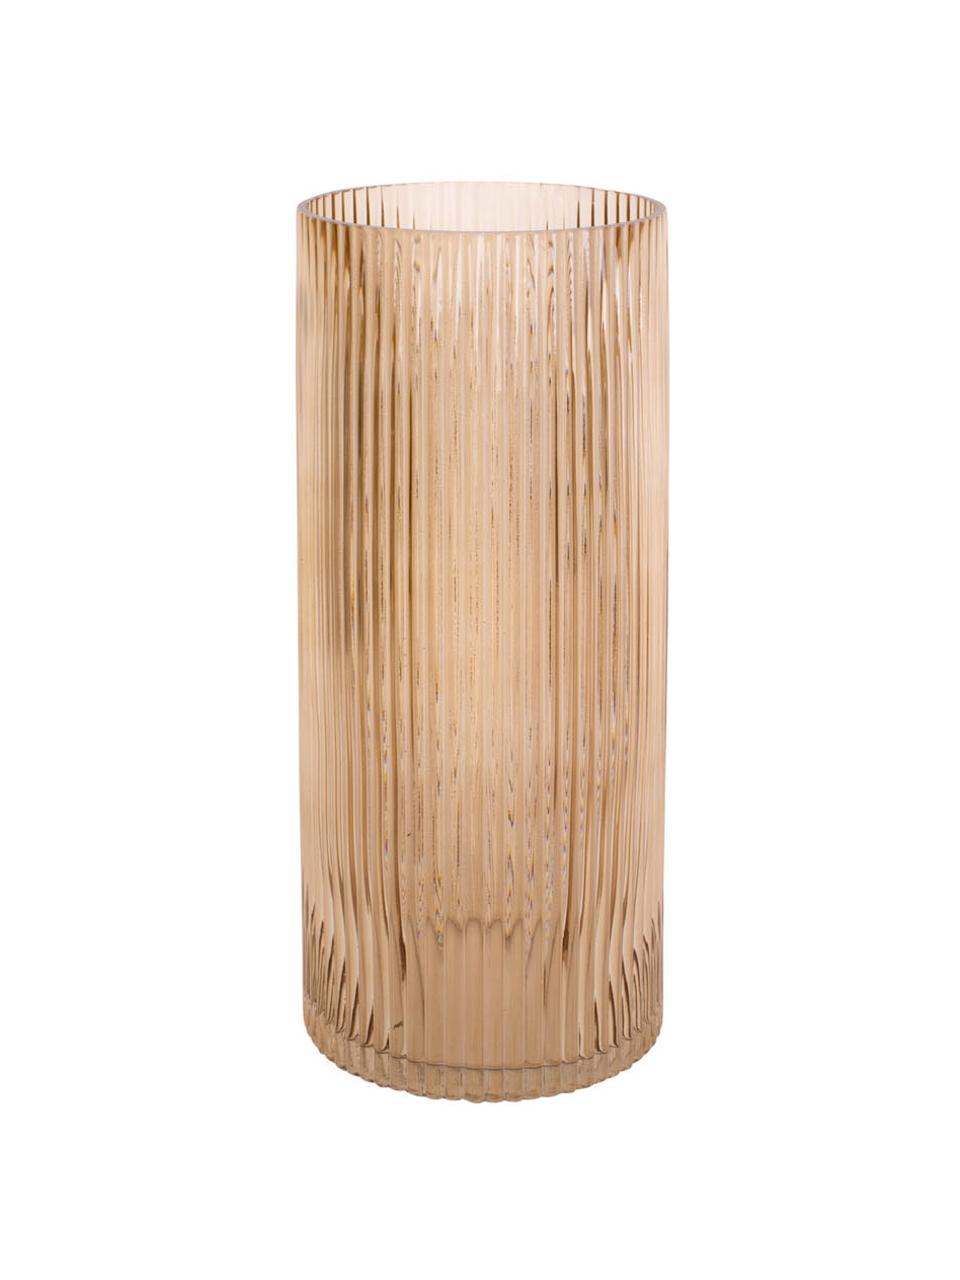 Grosse Glas-Vase Allure Straight in Hellbraun, Glas, getönt, Hellbraun, Ø 12 x H 30 cm